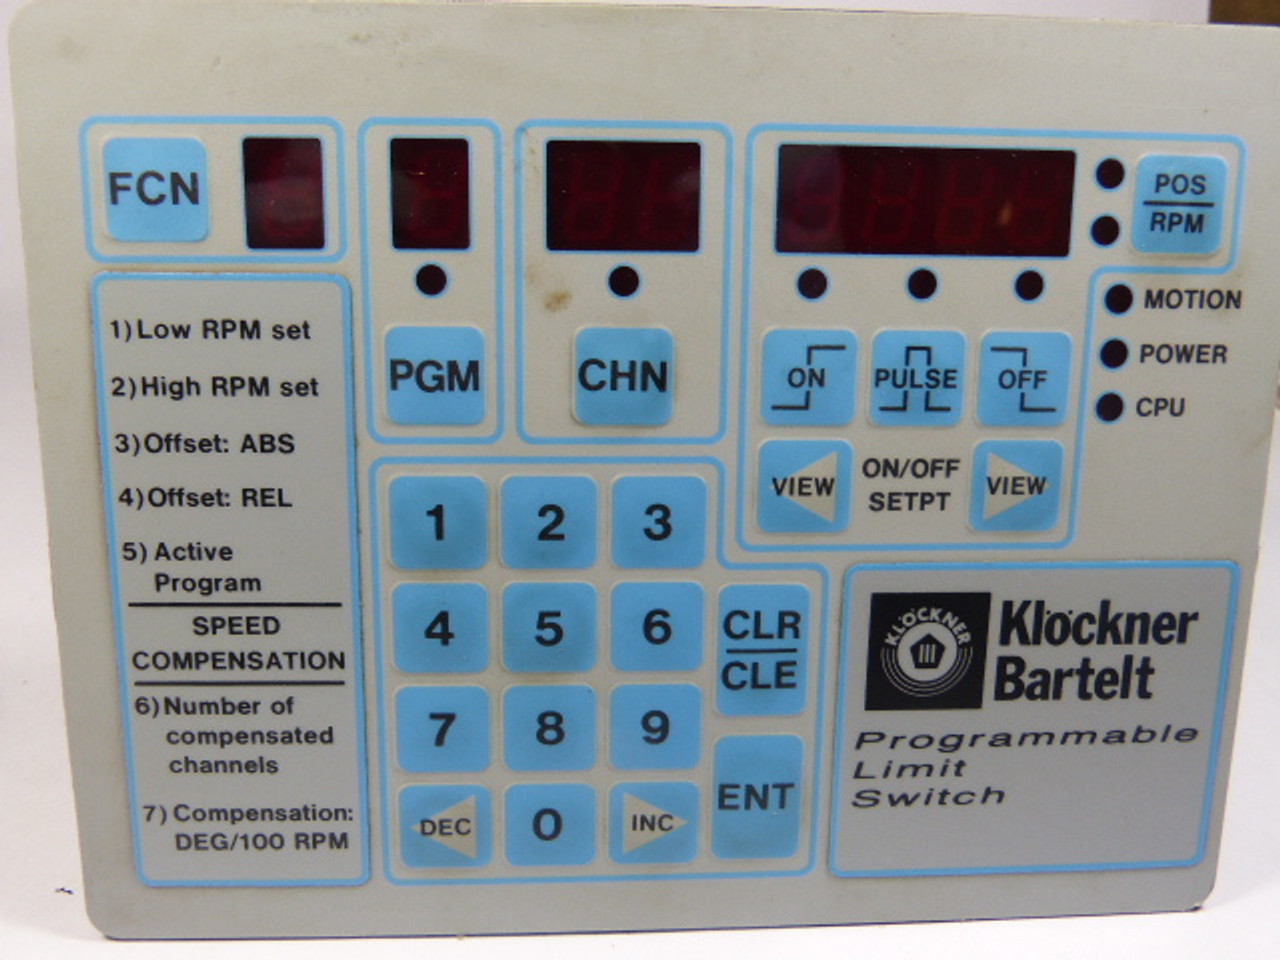 Klockner Bartelt 500081 Programmable Interface Switch USED